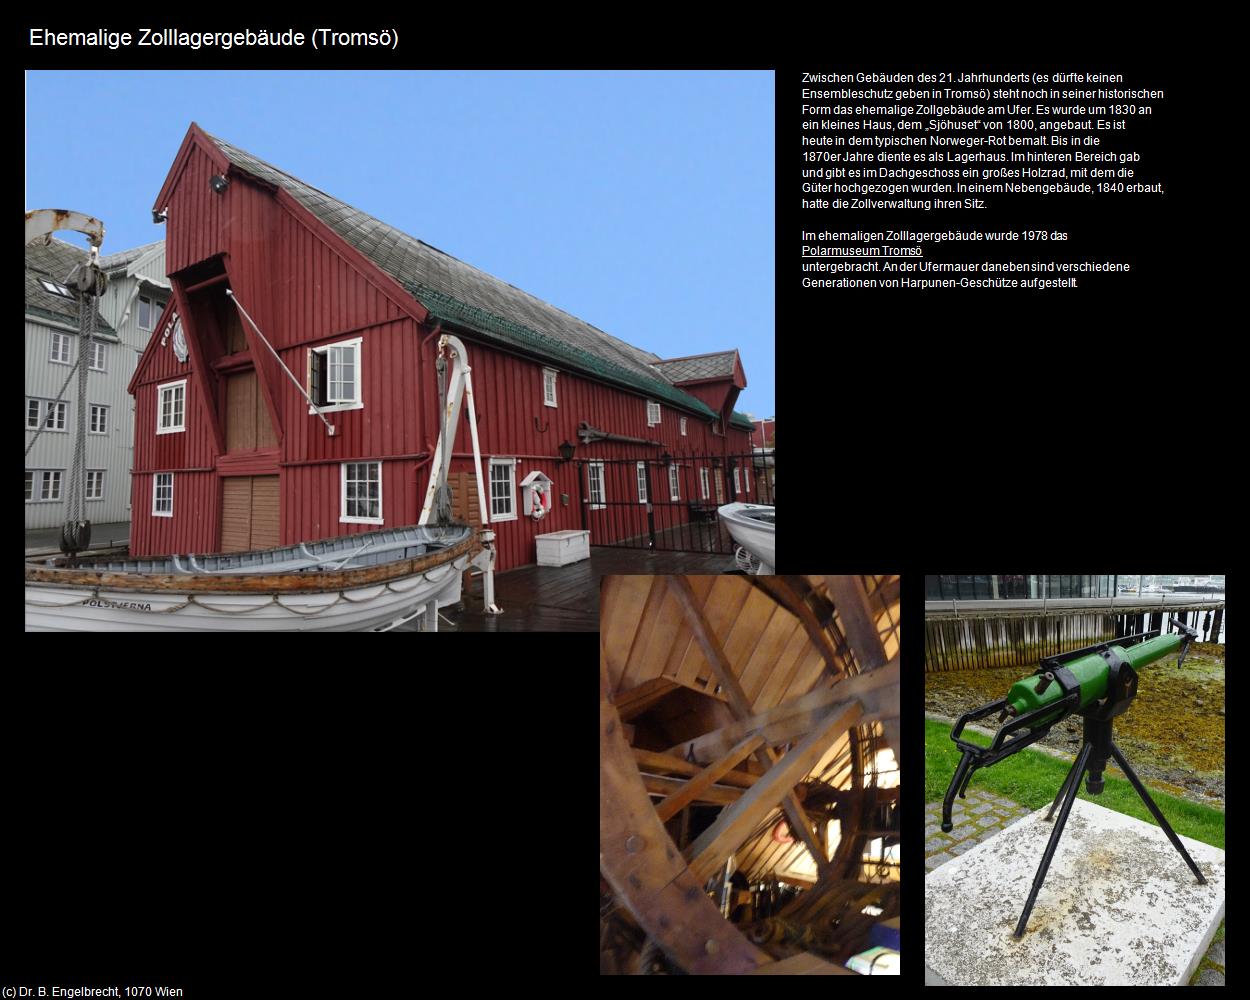 Ehem. Zolllagergebäude (Tromsö) in Kulturatlas-NORWEGEN(c)B.Engelbrecht